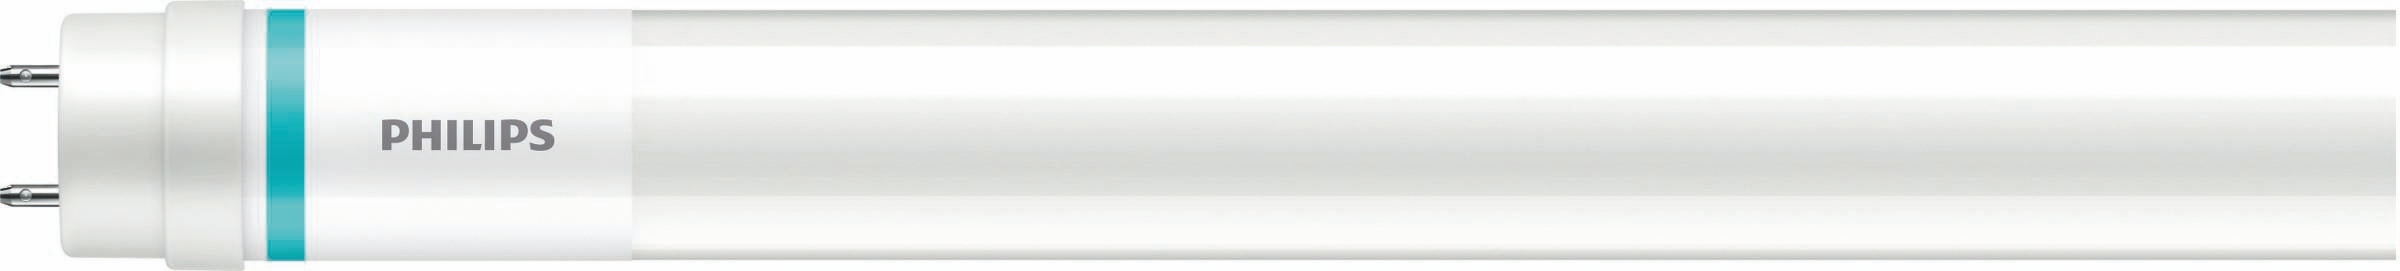 Philips 31682900 MASTER Value LEDtube T8 KVG/VVG/230V 1200 mm, 190 °, 15,5 W, 840, 2500 lm, G13, nicht dimmbar